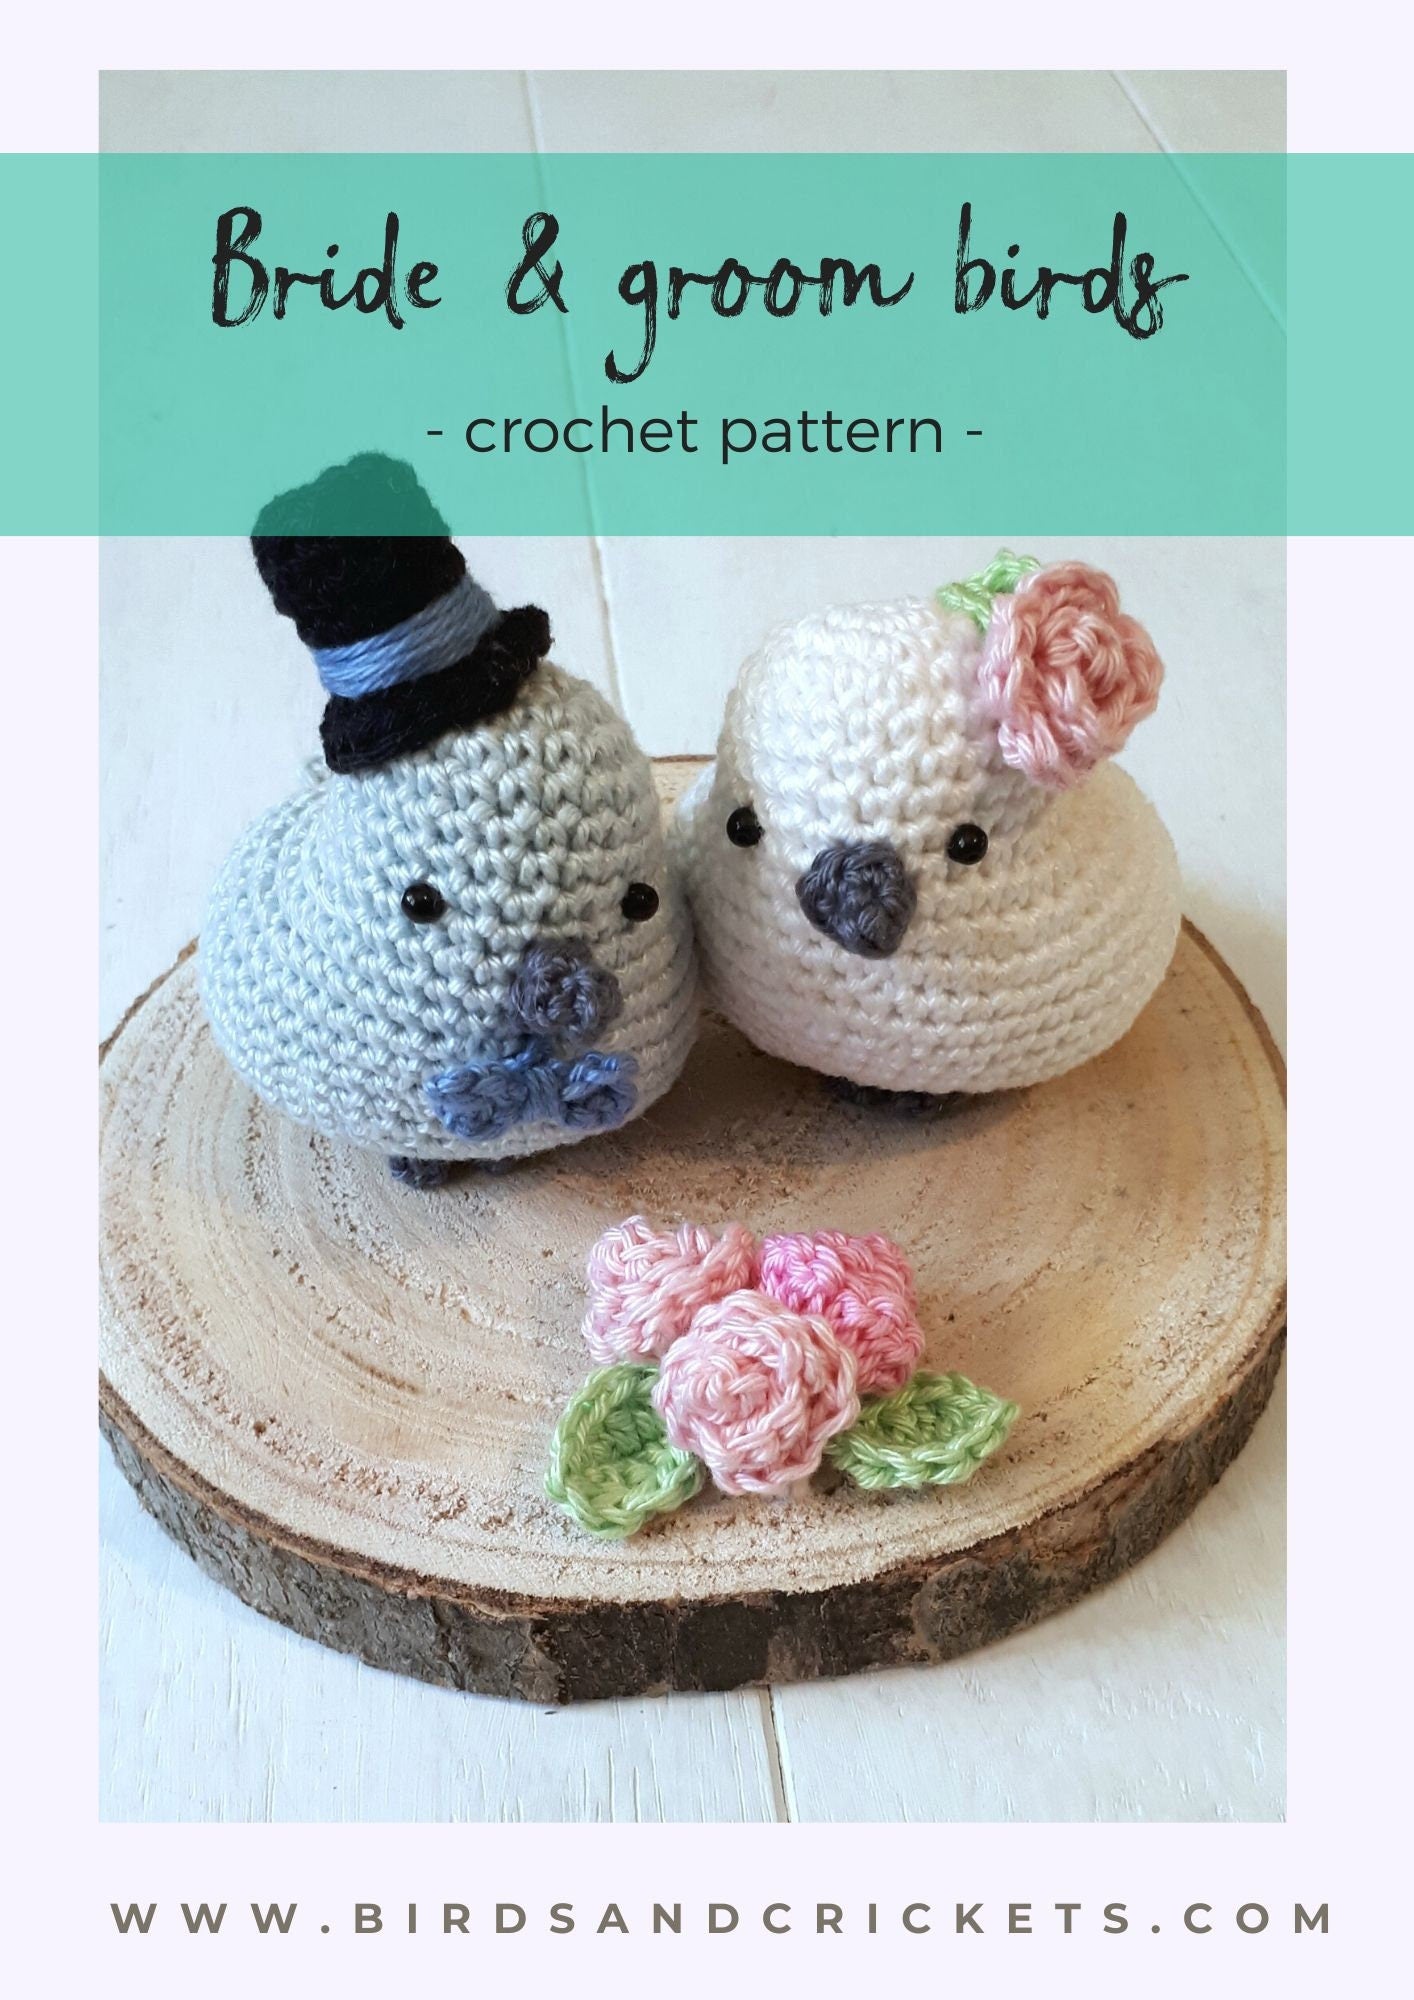 Bride and groom birds crochet pattern